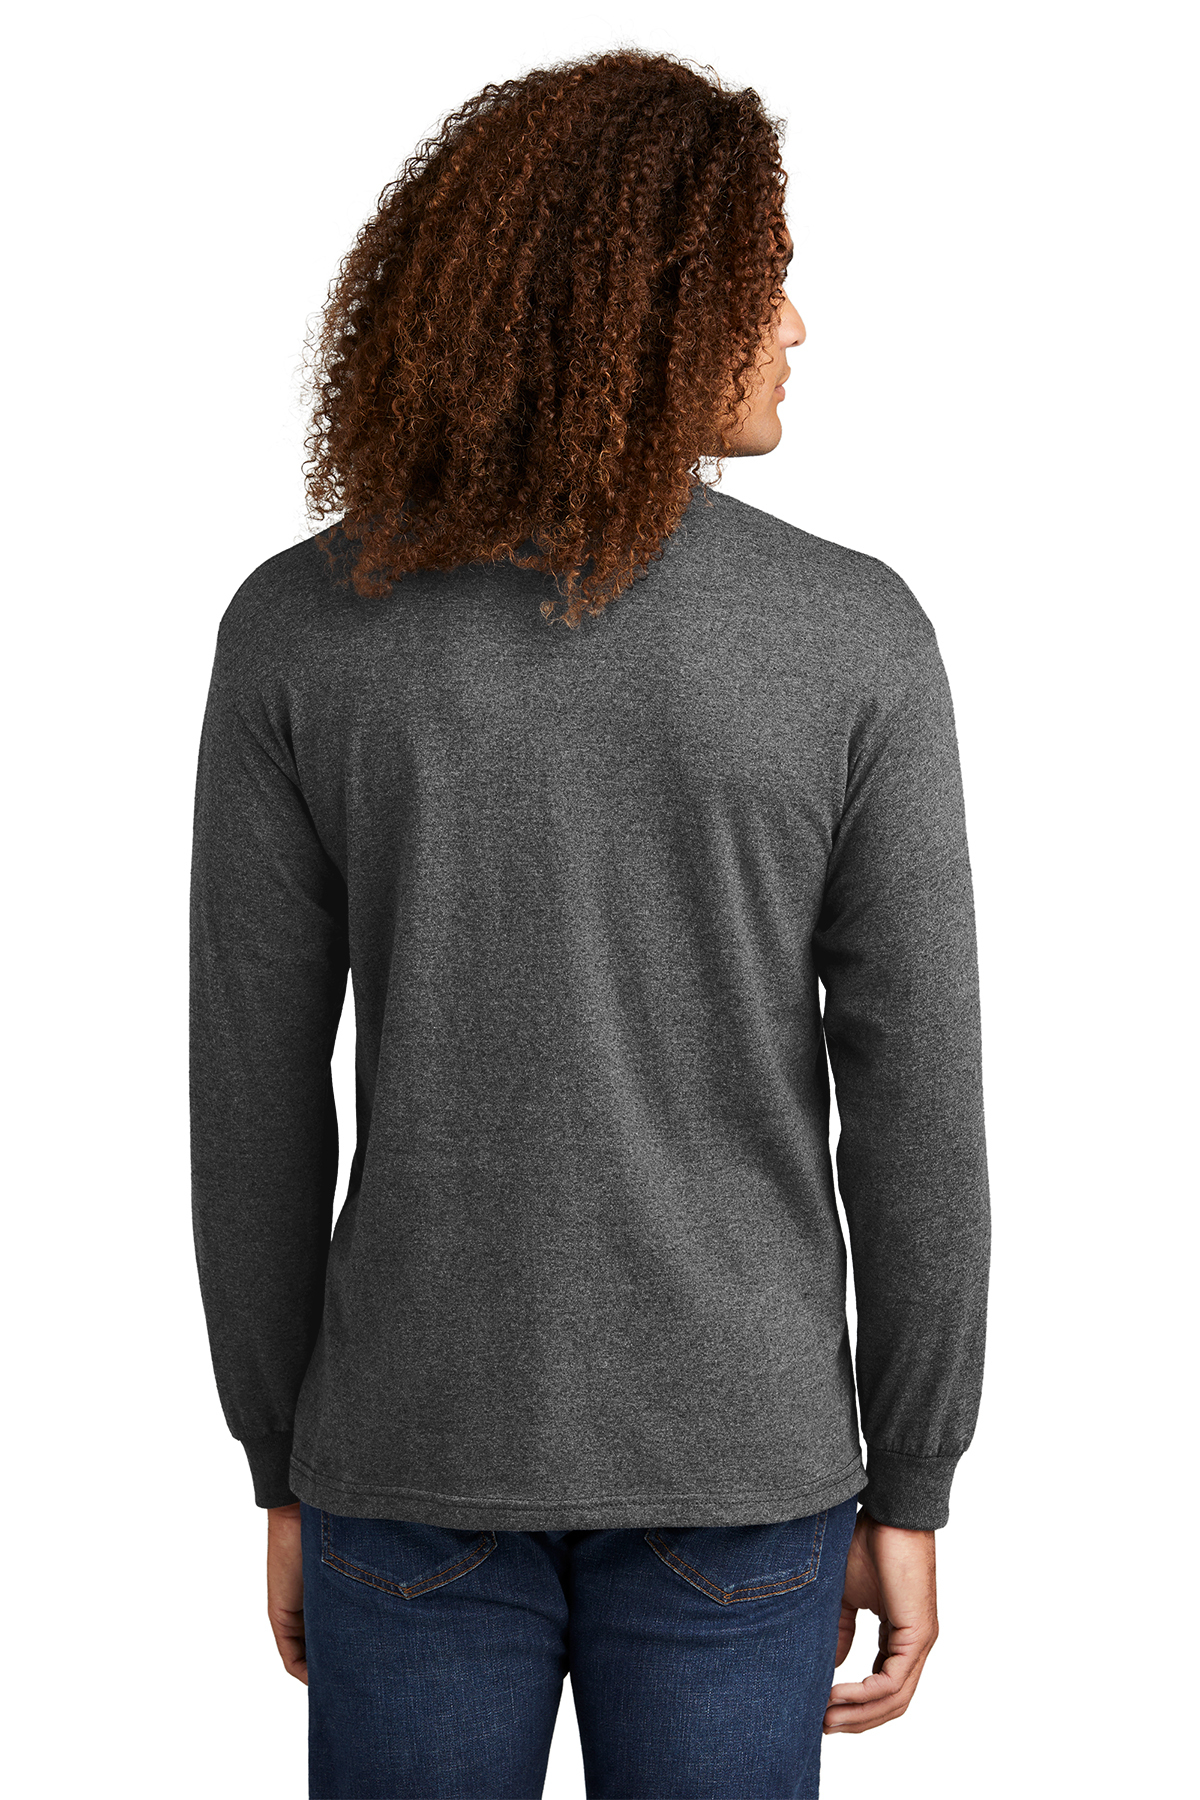 American Apparel Heavyweight Unisex Long Sleeve T-Shirt | Product | SanMar